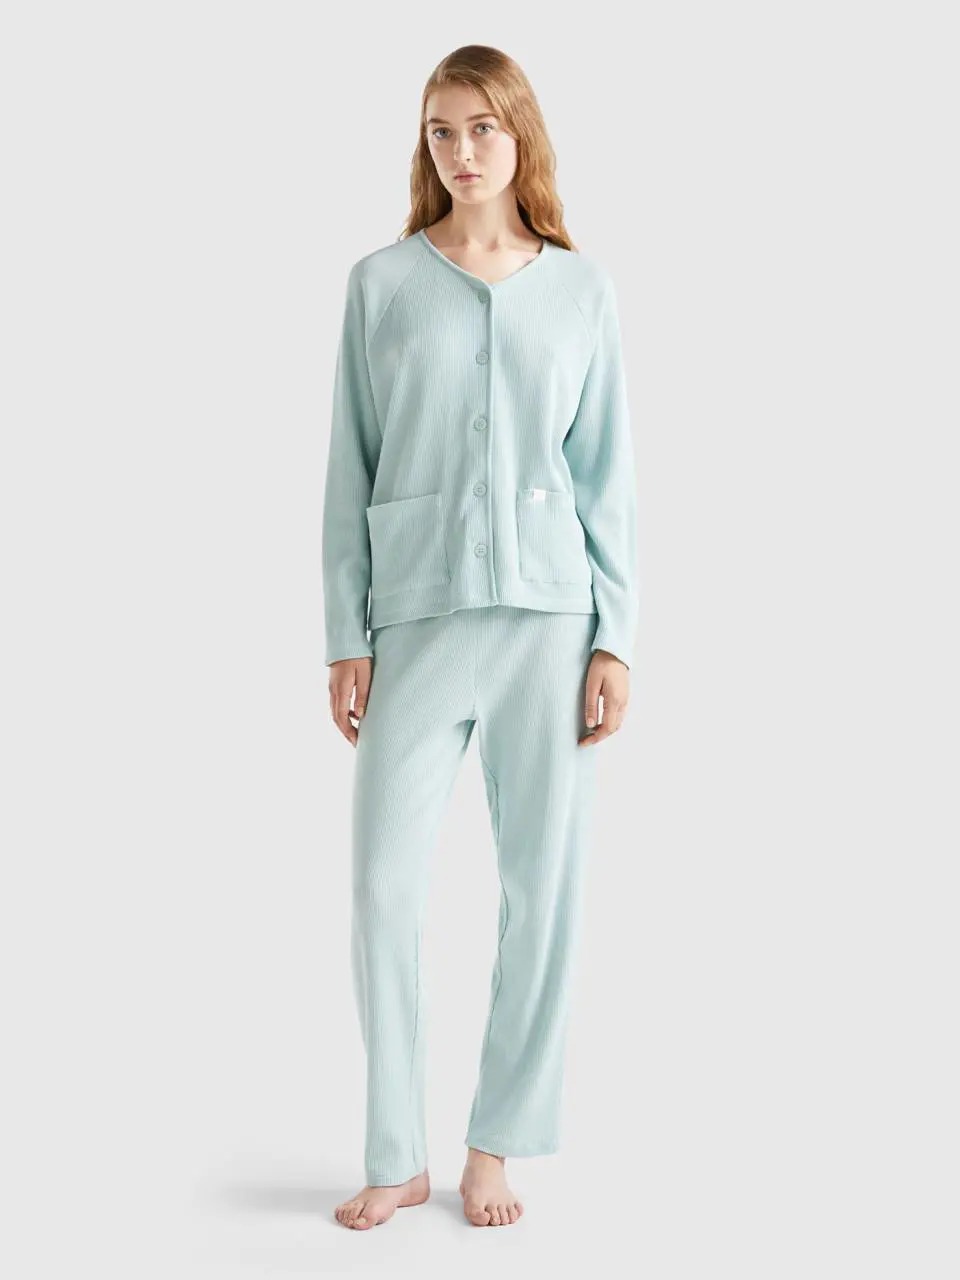 Benetton long pyjamas in pure cotton. 1